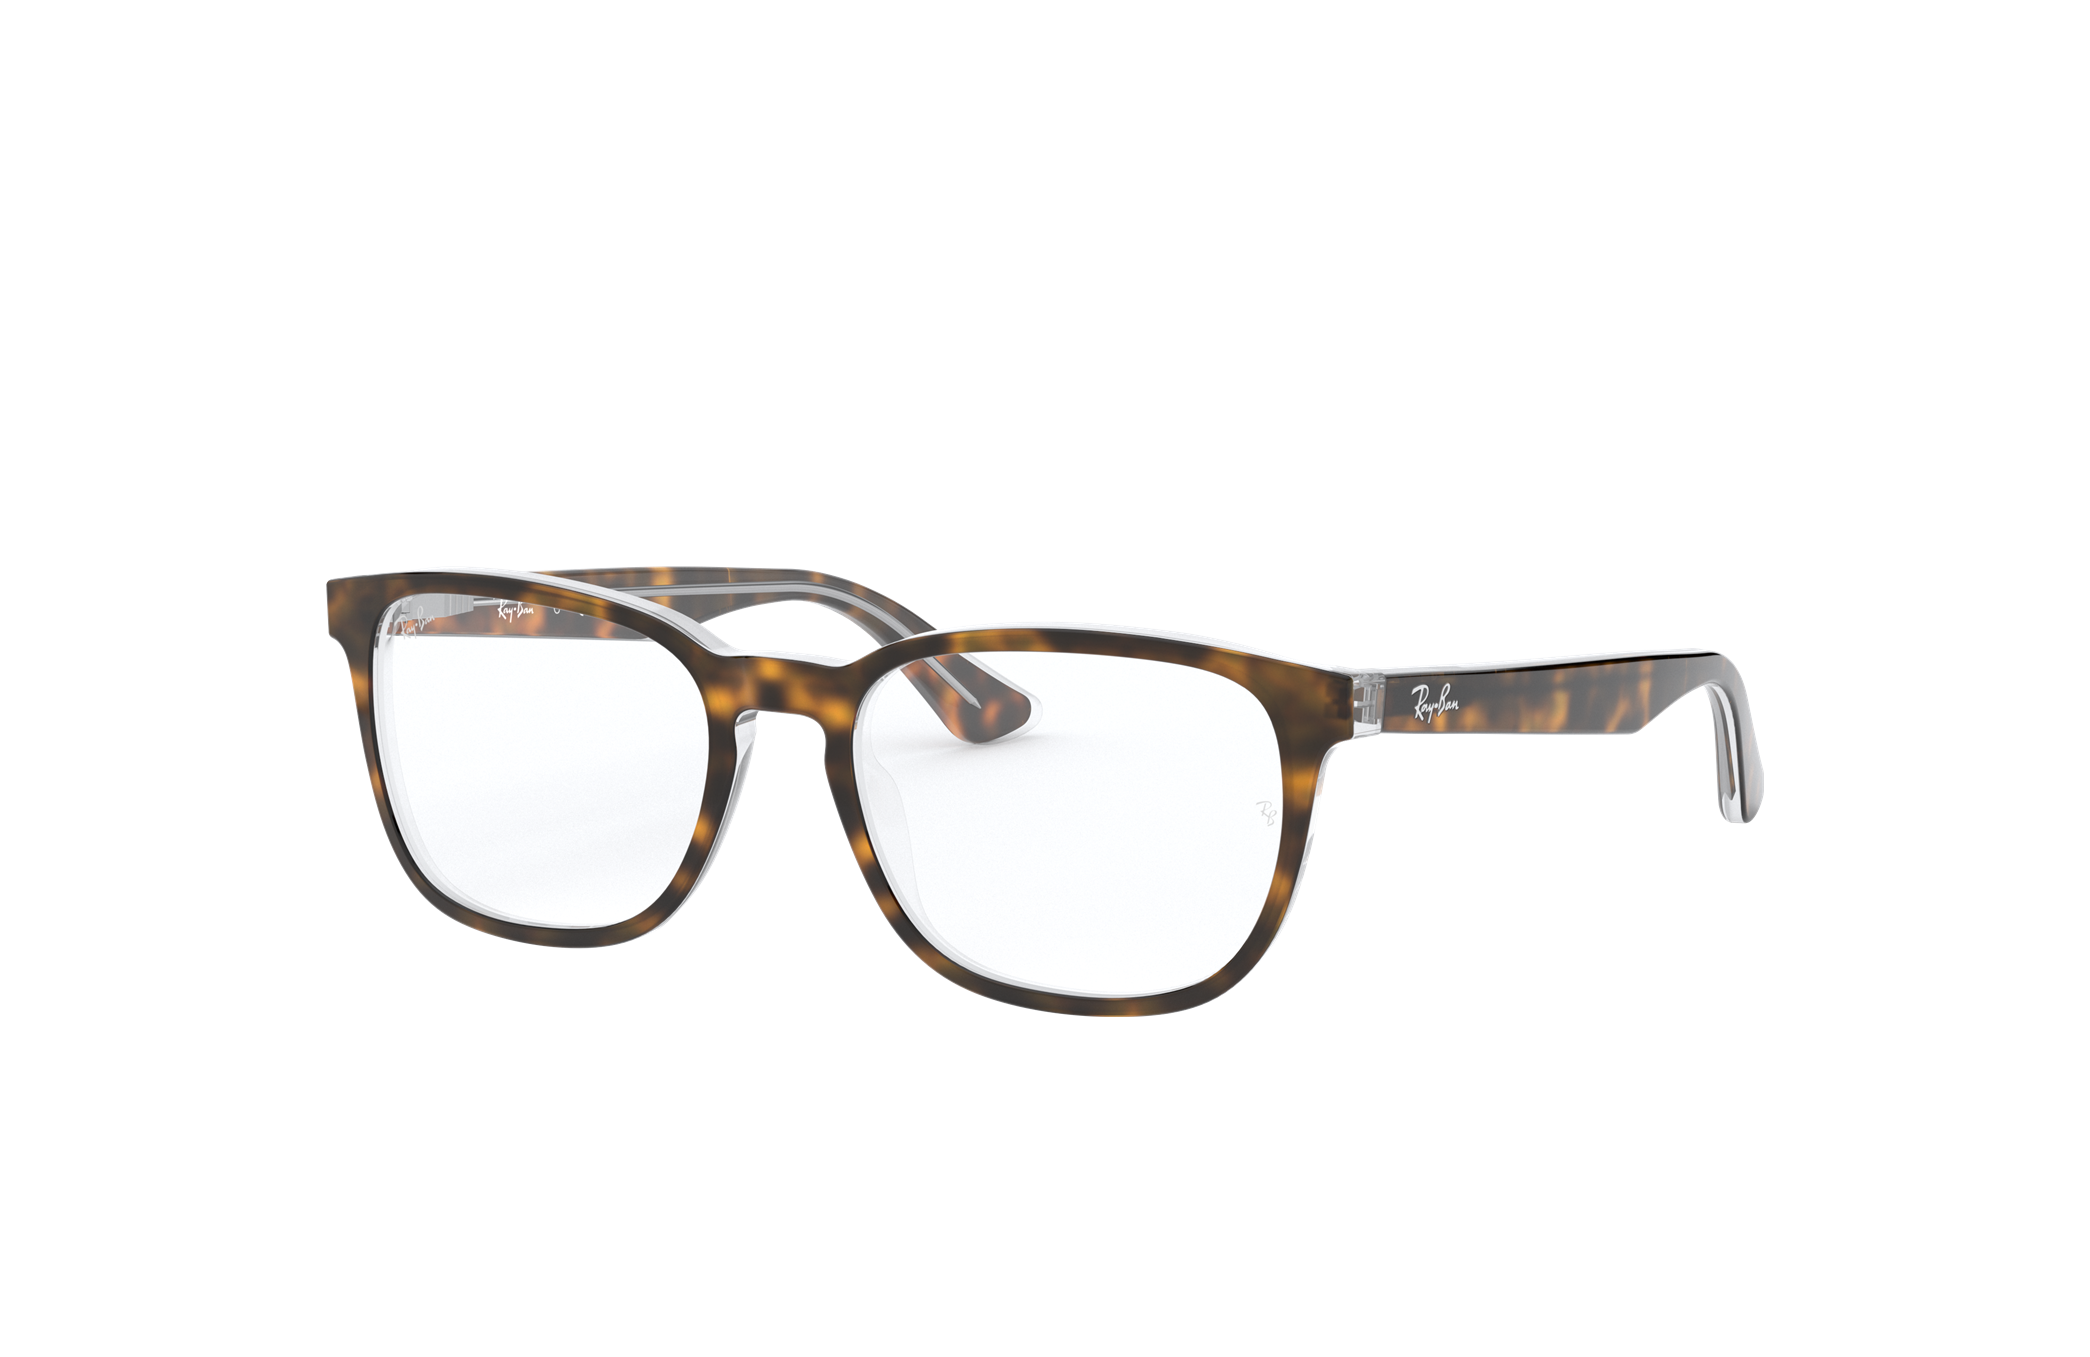 Rb1592 Optics Kids Eyeglasses with Havana On Transparent Frame - RY1592 |  Ray-Ban® US